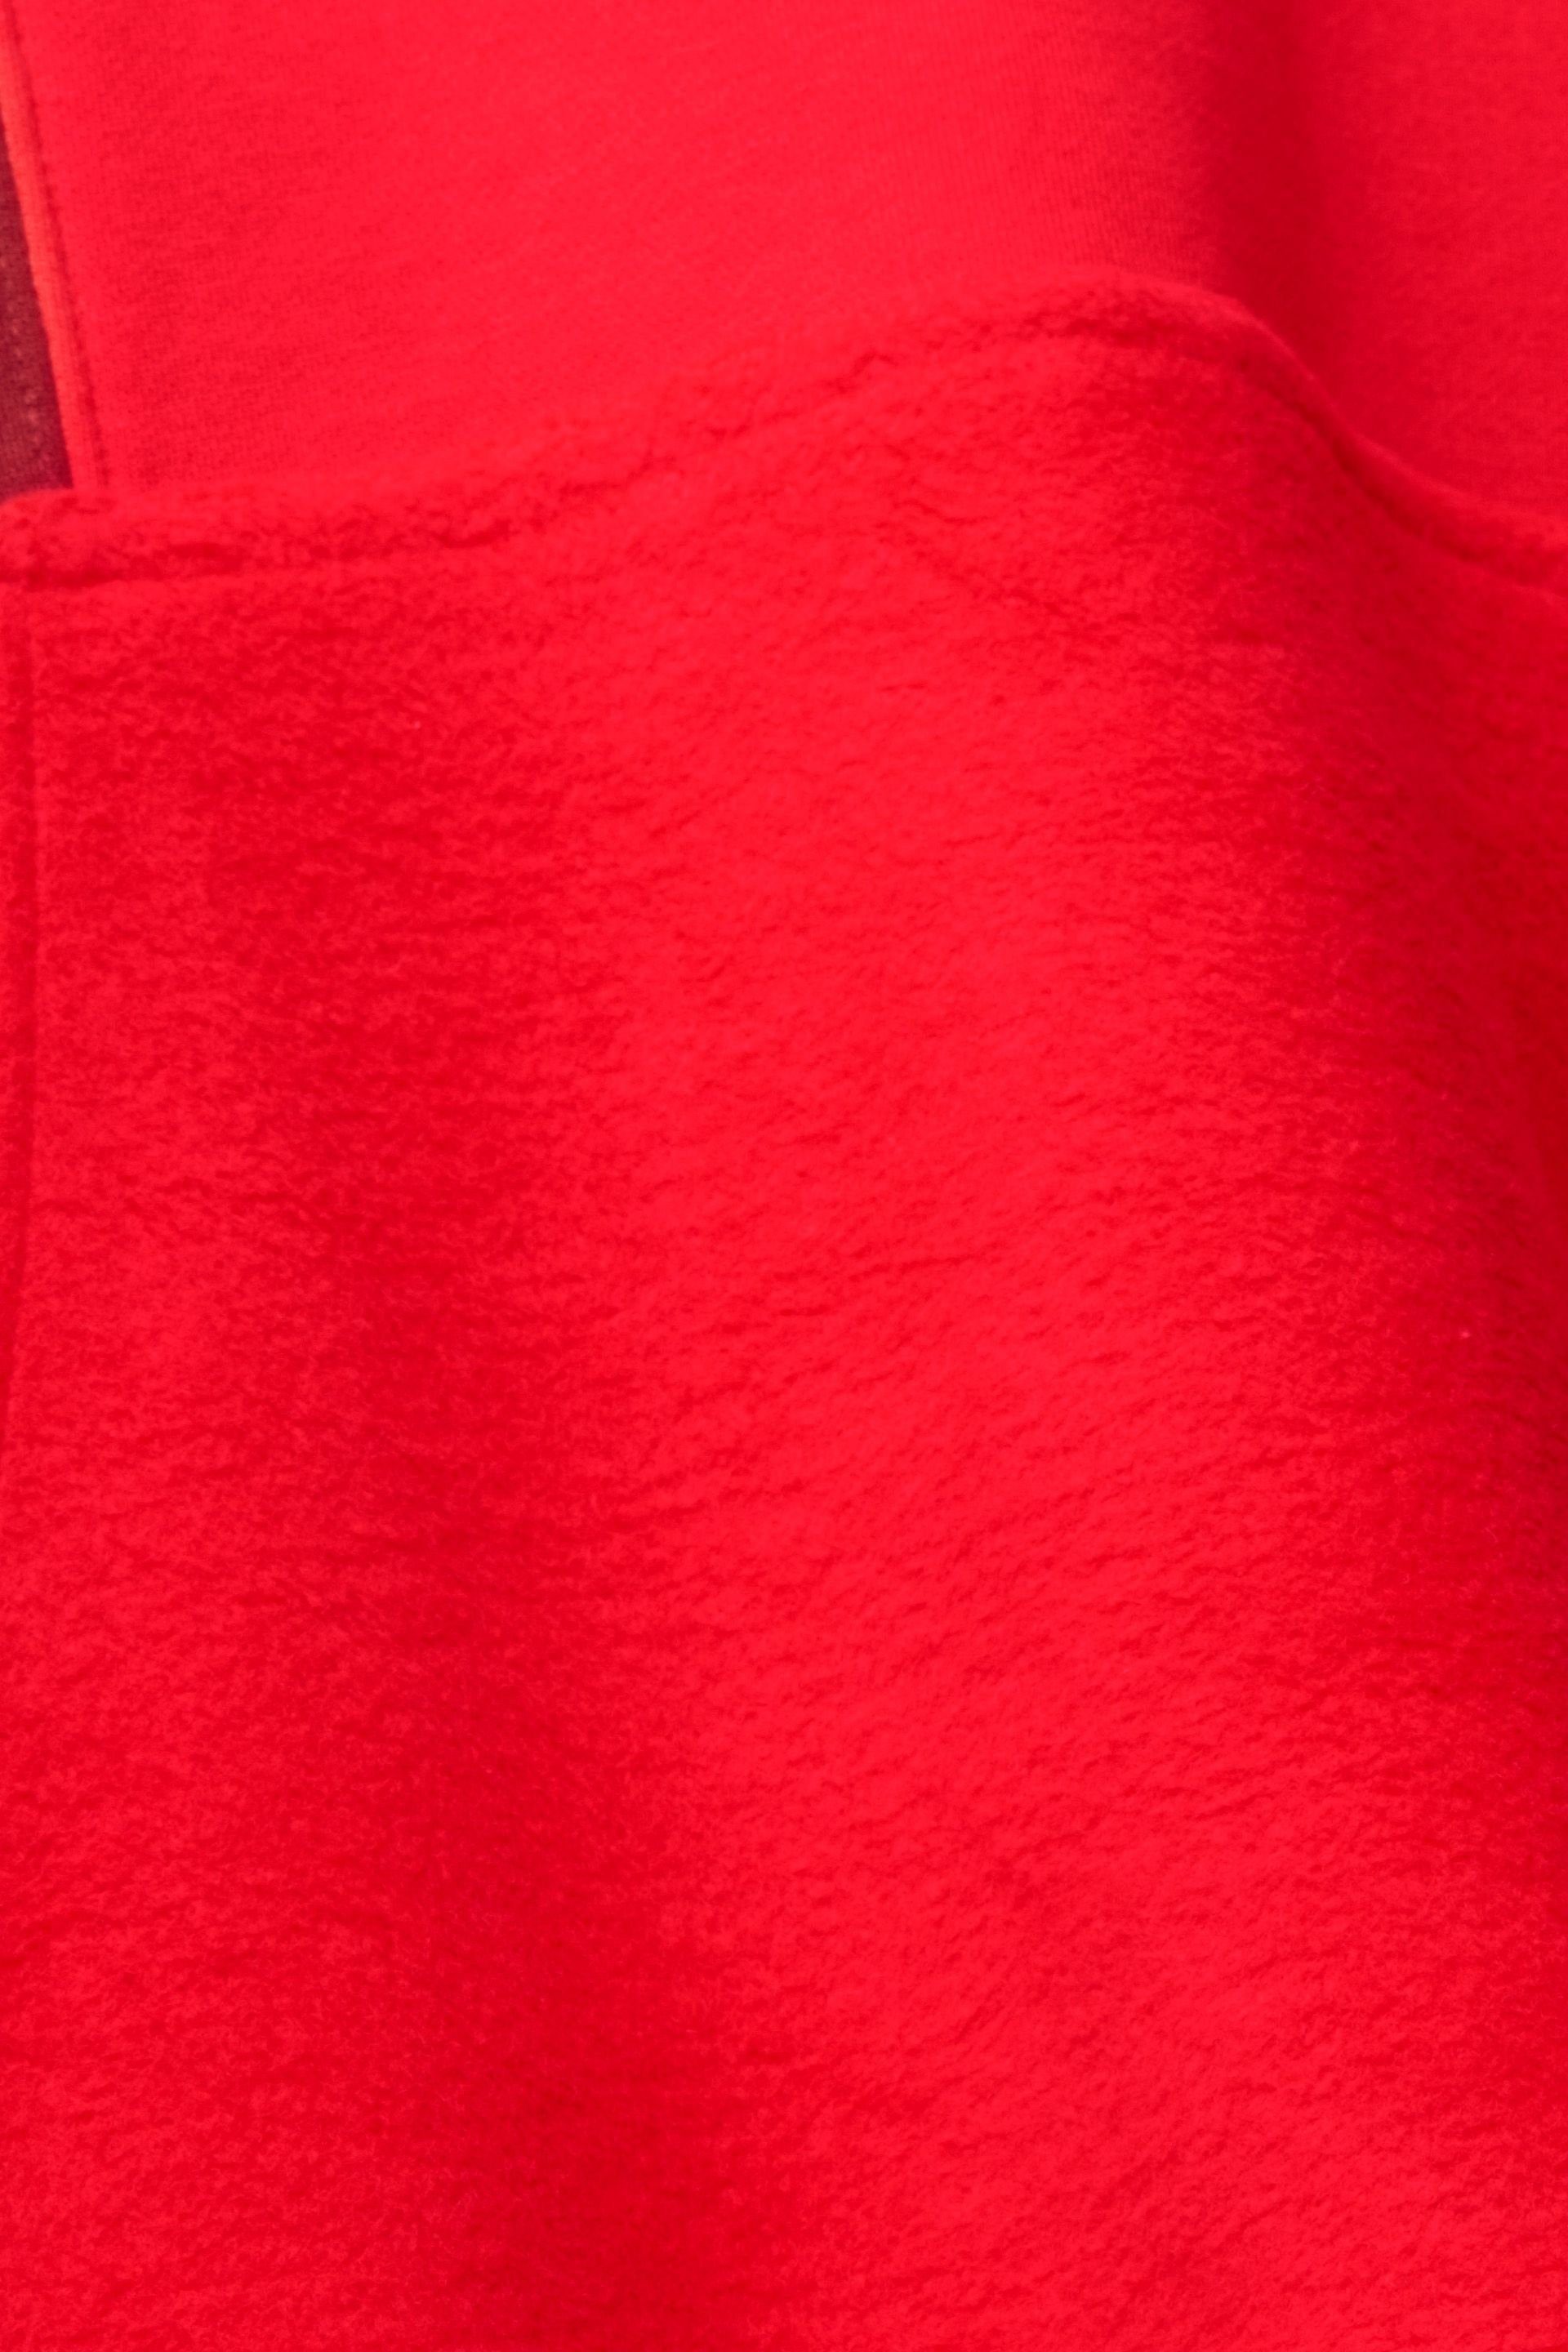 Sweatshirt red Esprit